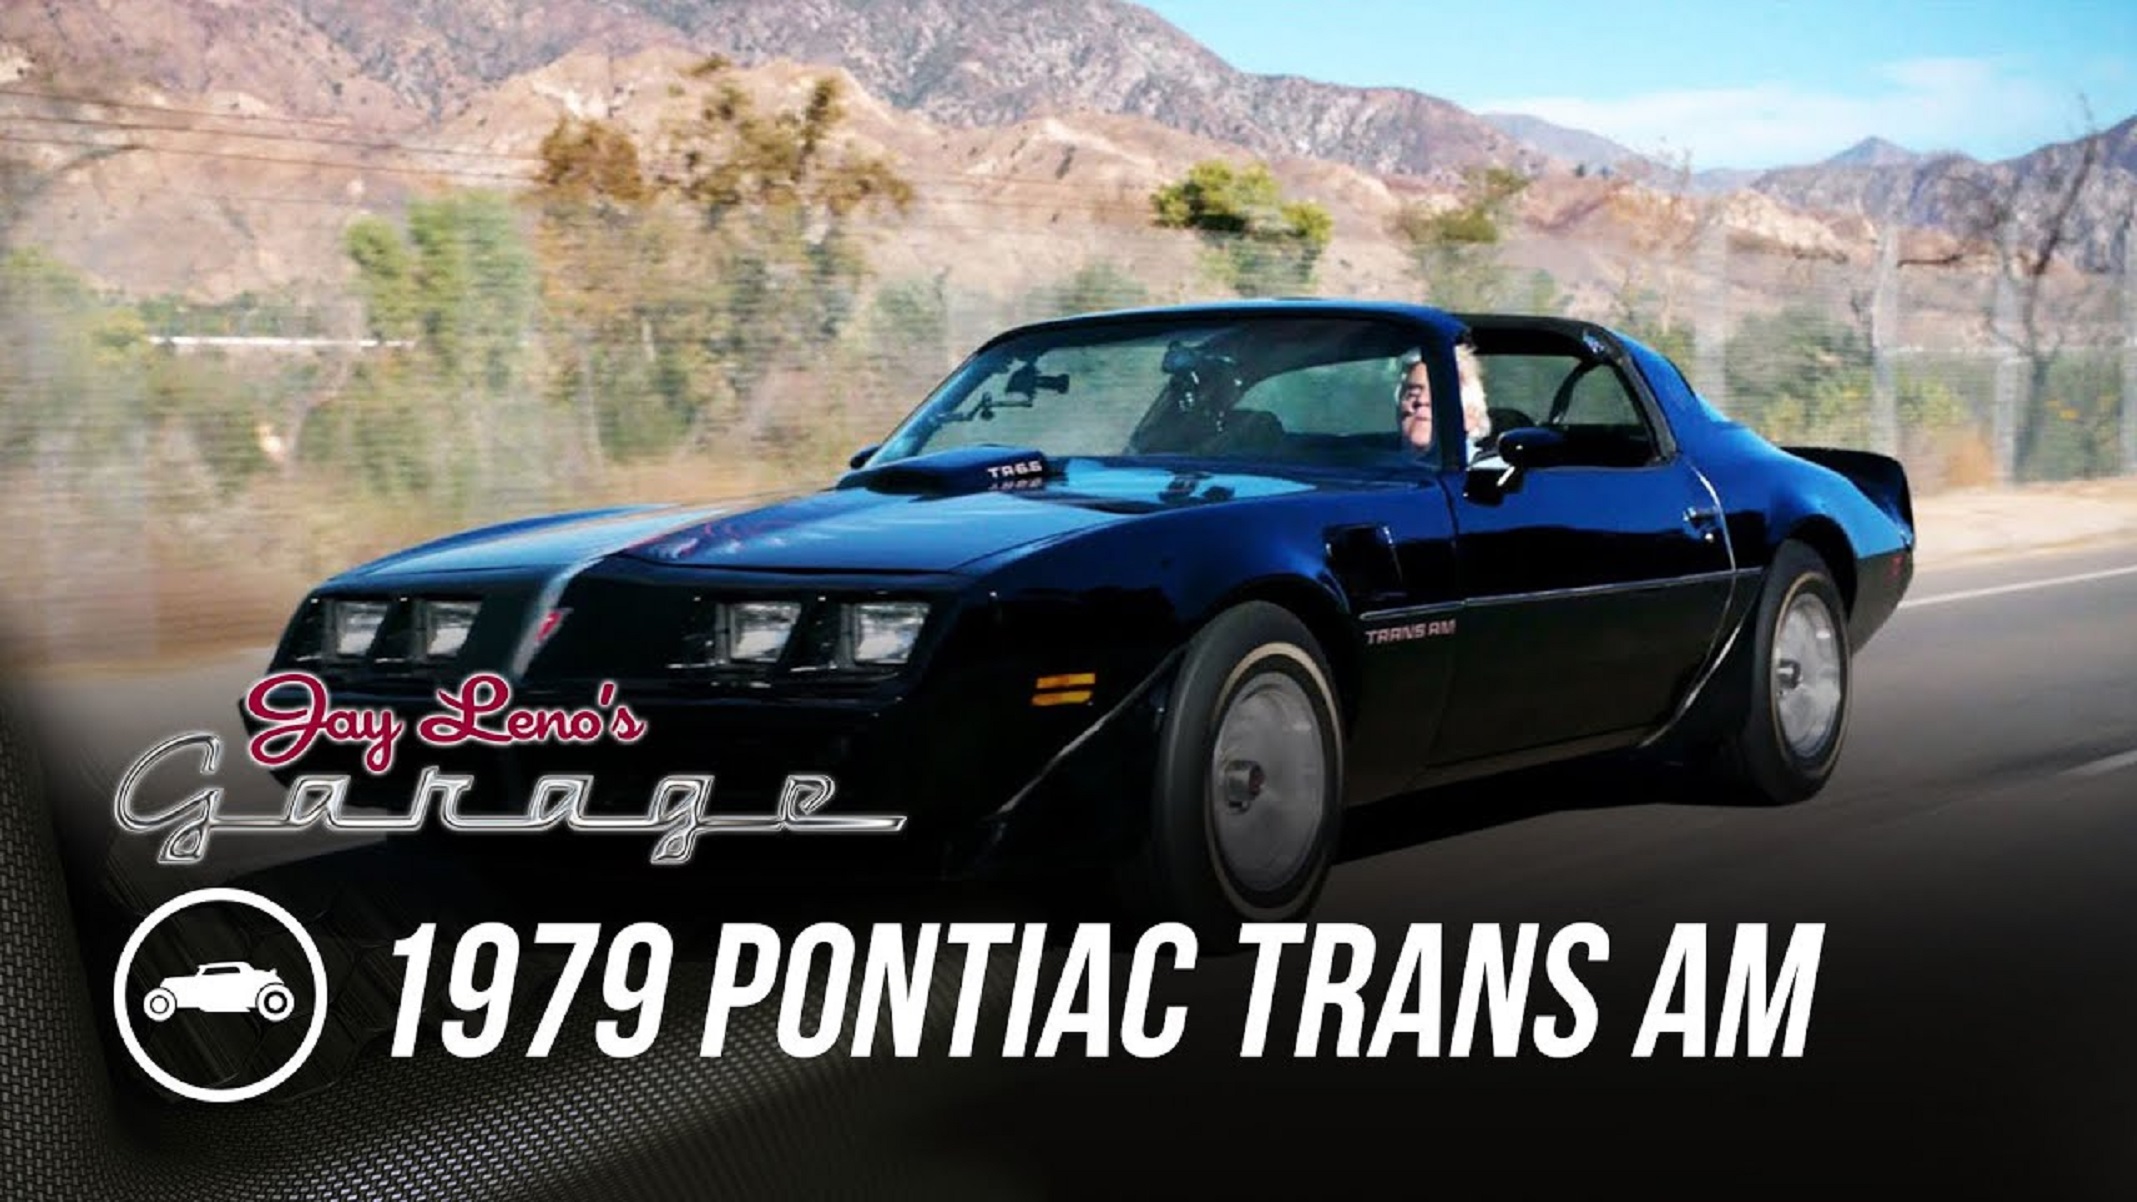 Jay Leno driving a black 1979 Pontiac Trans Am